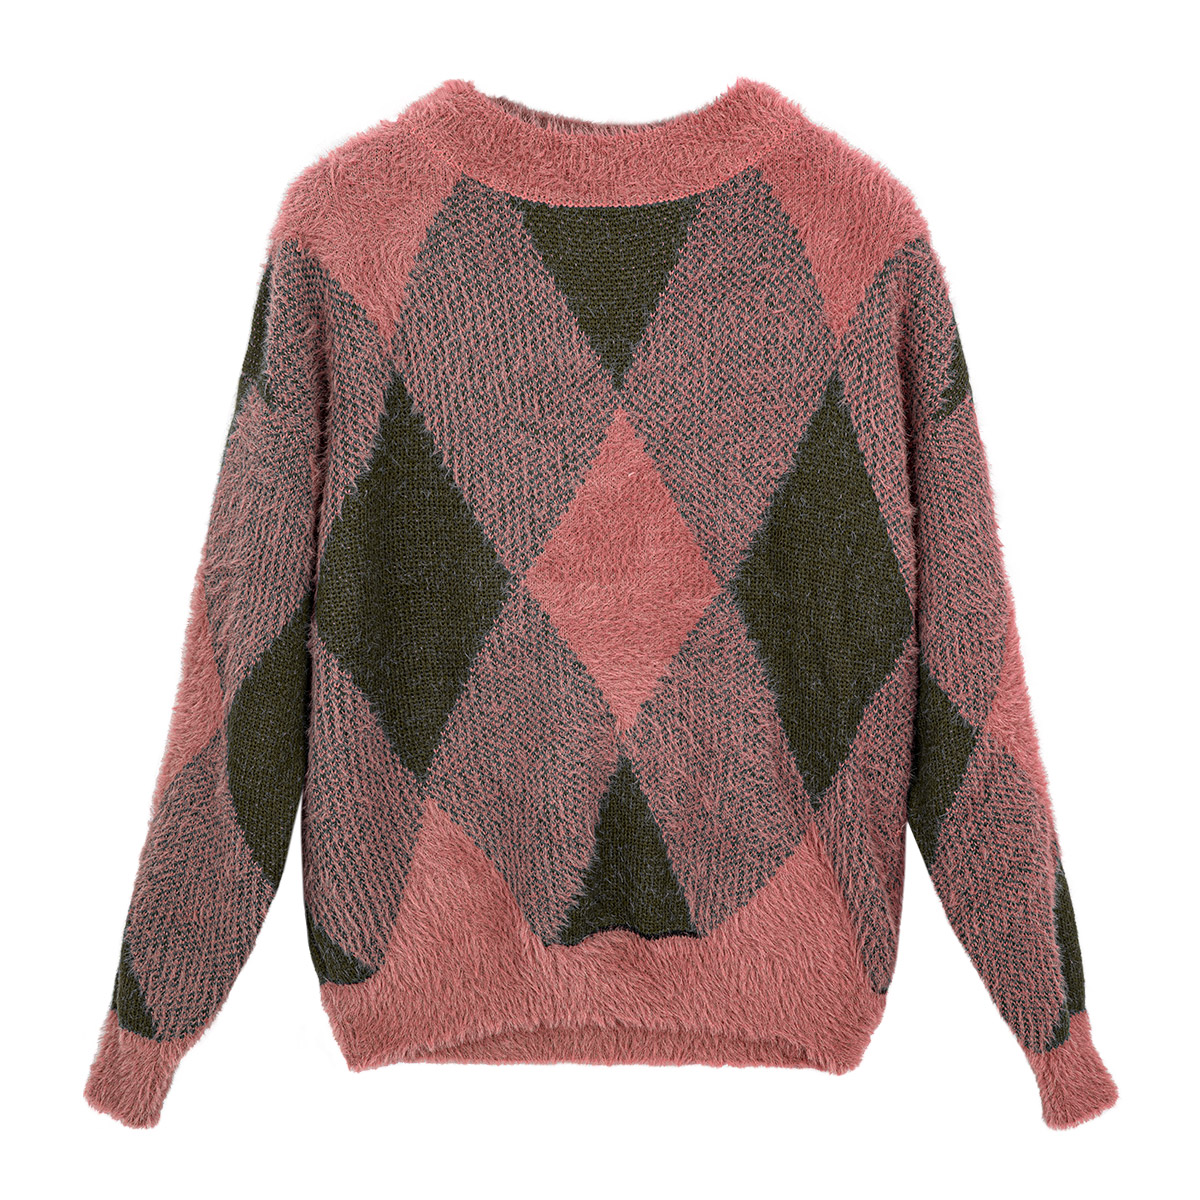 Soft checkered sweater